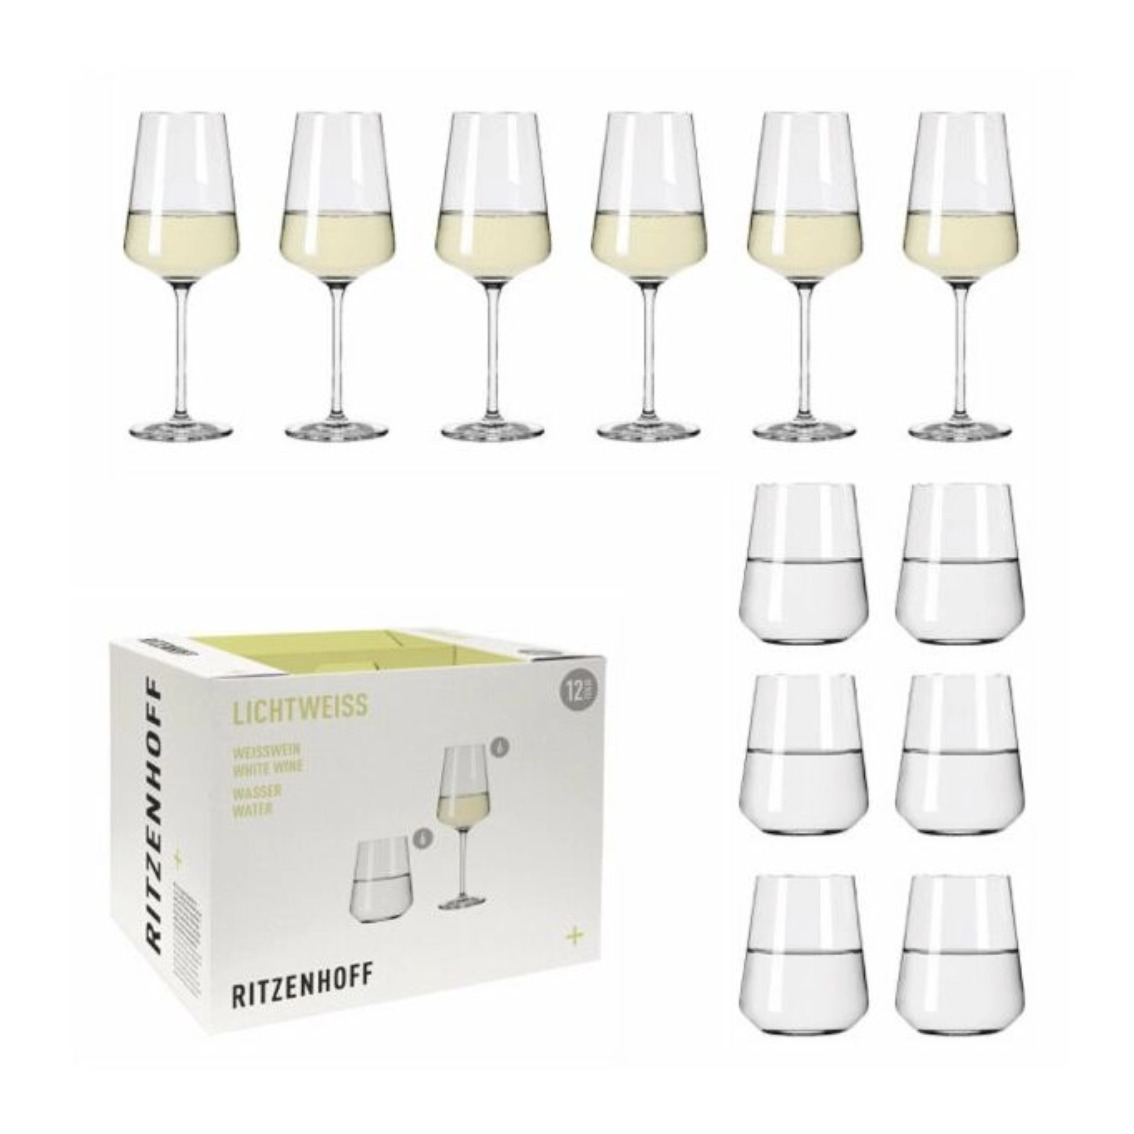 Ritzenhoff Lichtweiss Set 6 calici vino bianco + 6 bicchieri acqua